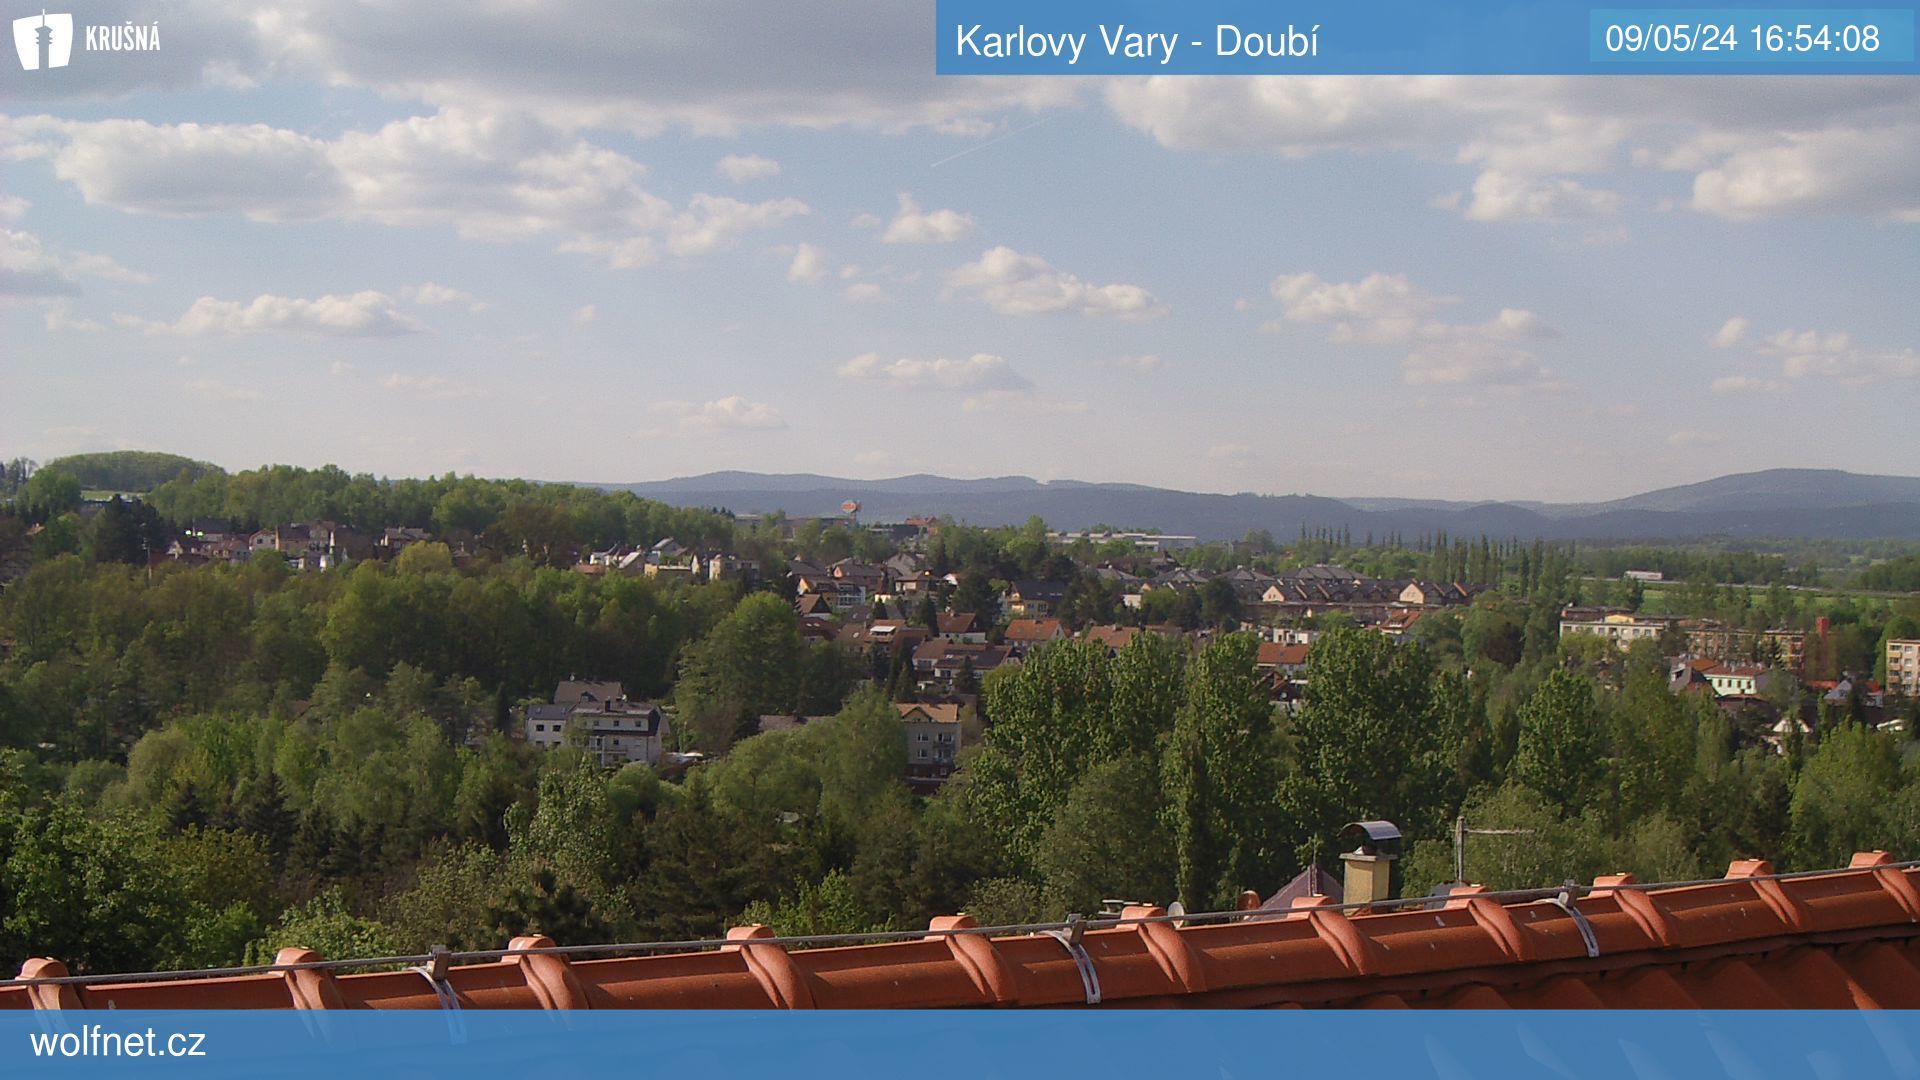 Webkamera Karlovy Vary doubí